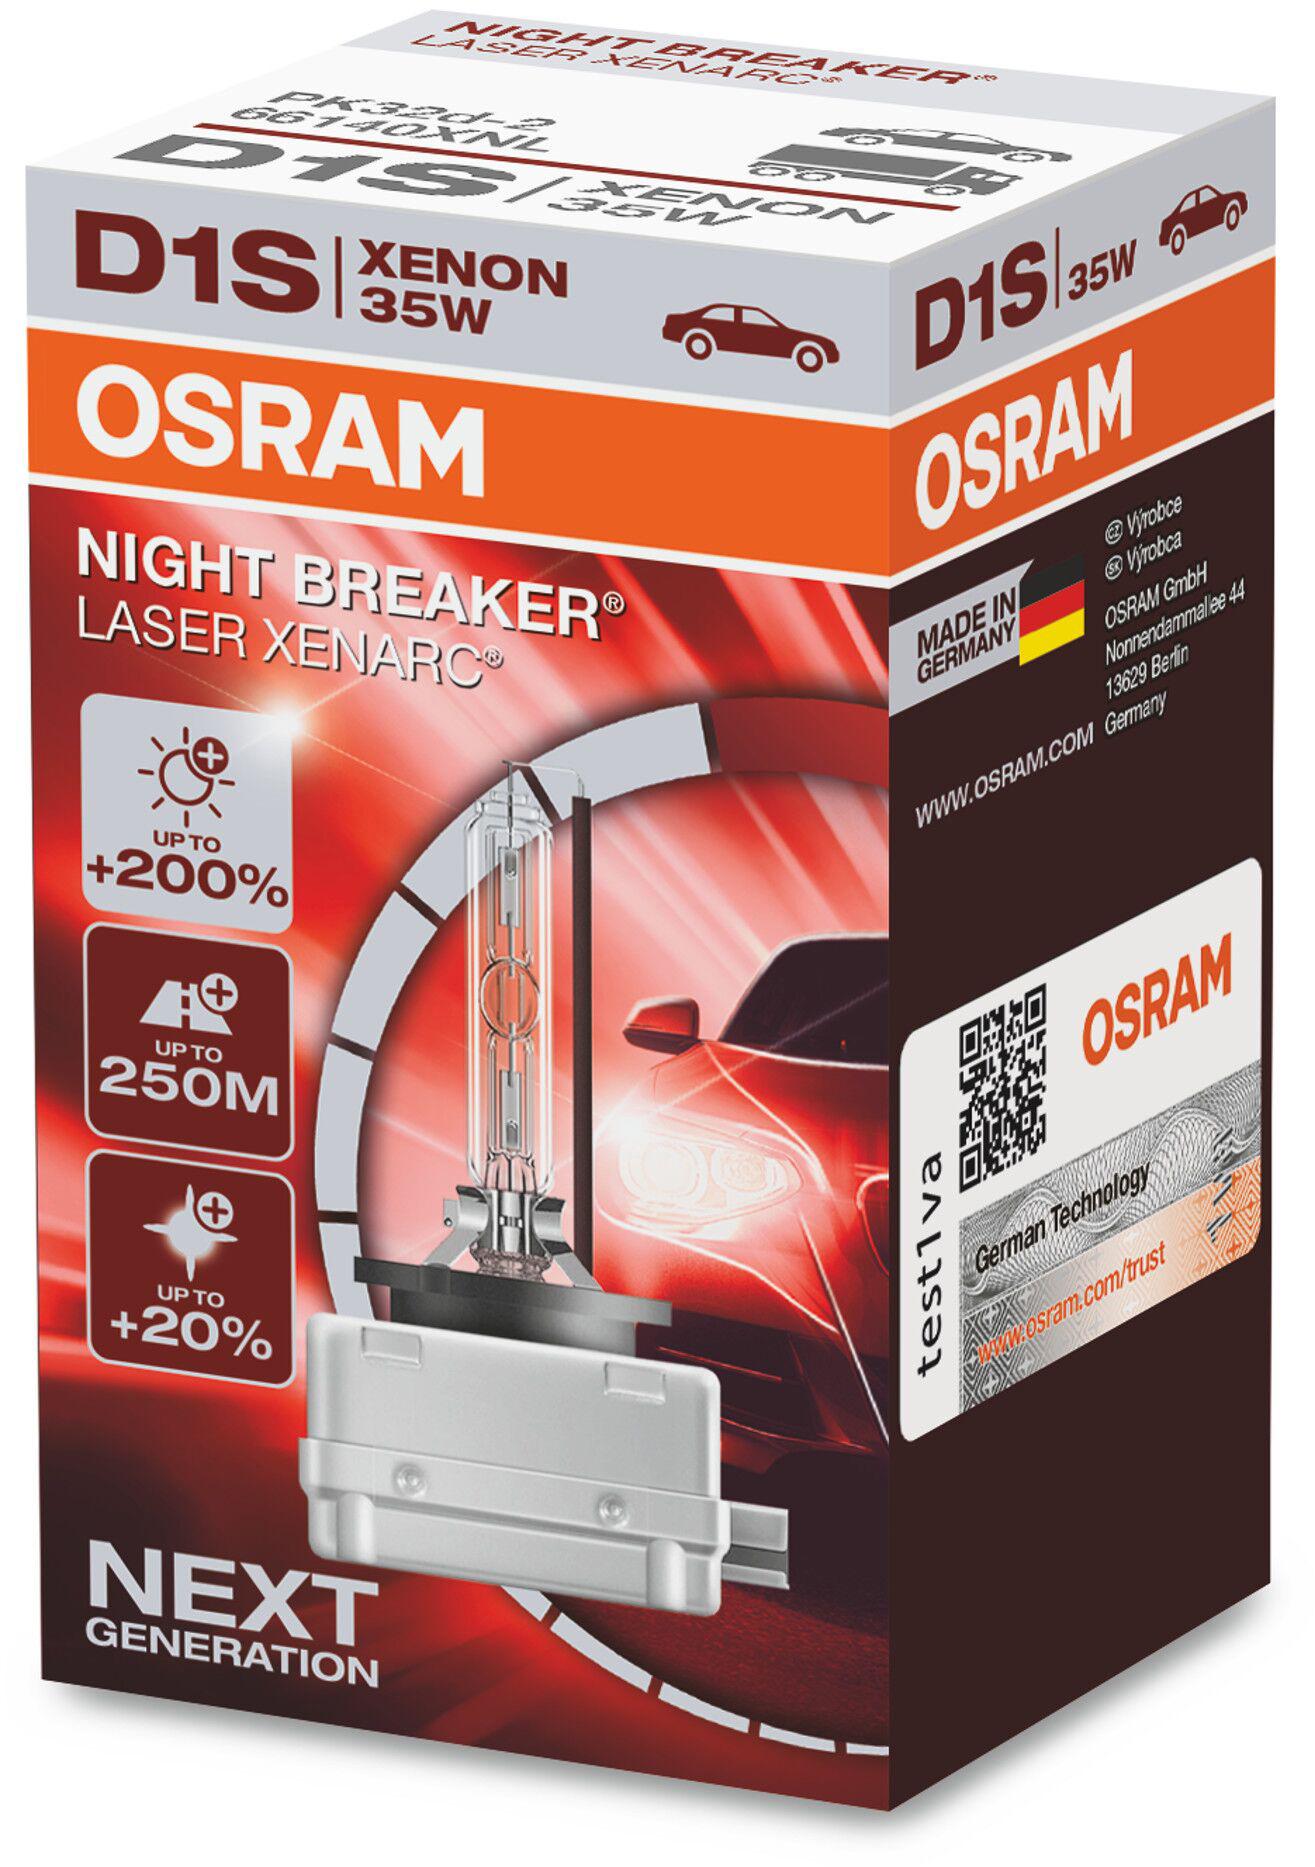 Osram D1S 85V 35W Xenarc Hid Bulb